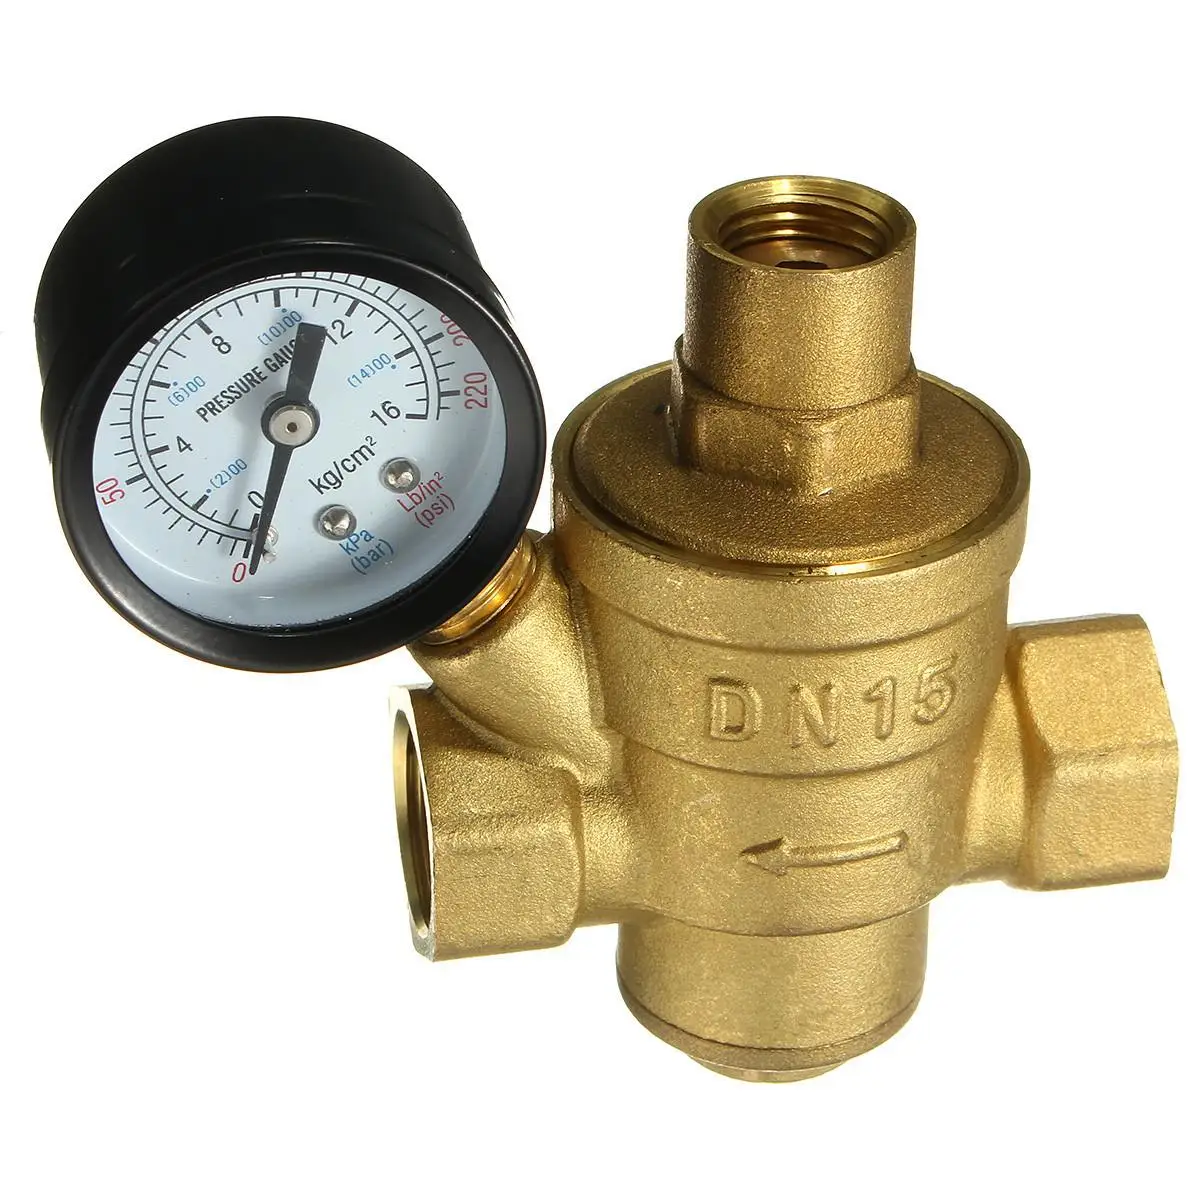 

With Gauge Meter DN15 1/2 Brass Water Pressure Reducing Maintaining Valves Regulator Adjustable Relief Valves